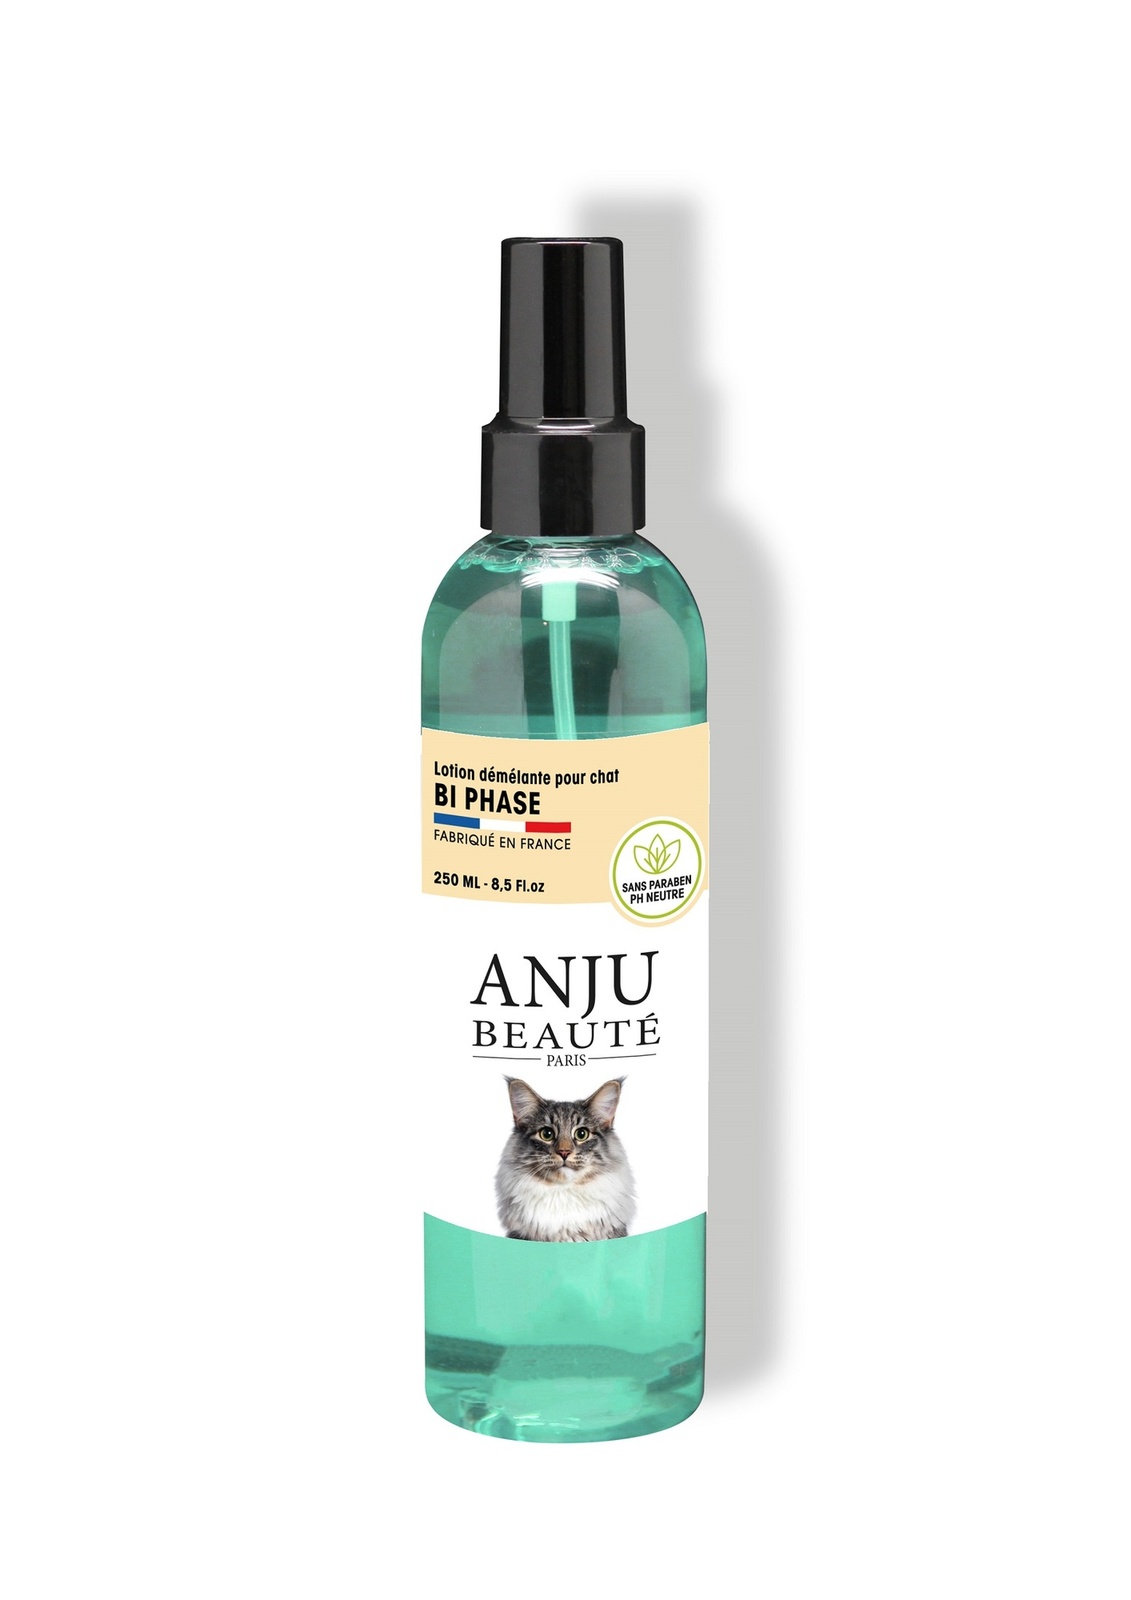 anju beaute anju beaute шампунь для кошек универсальный 200 мл 200 г Anju Beaute Anju Beaute спрей для кошек для распутывания шерсти, 250 мл (250 г)